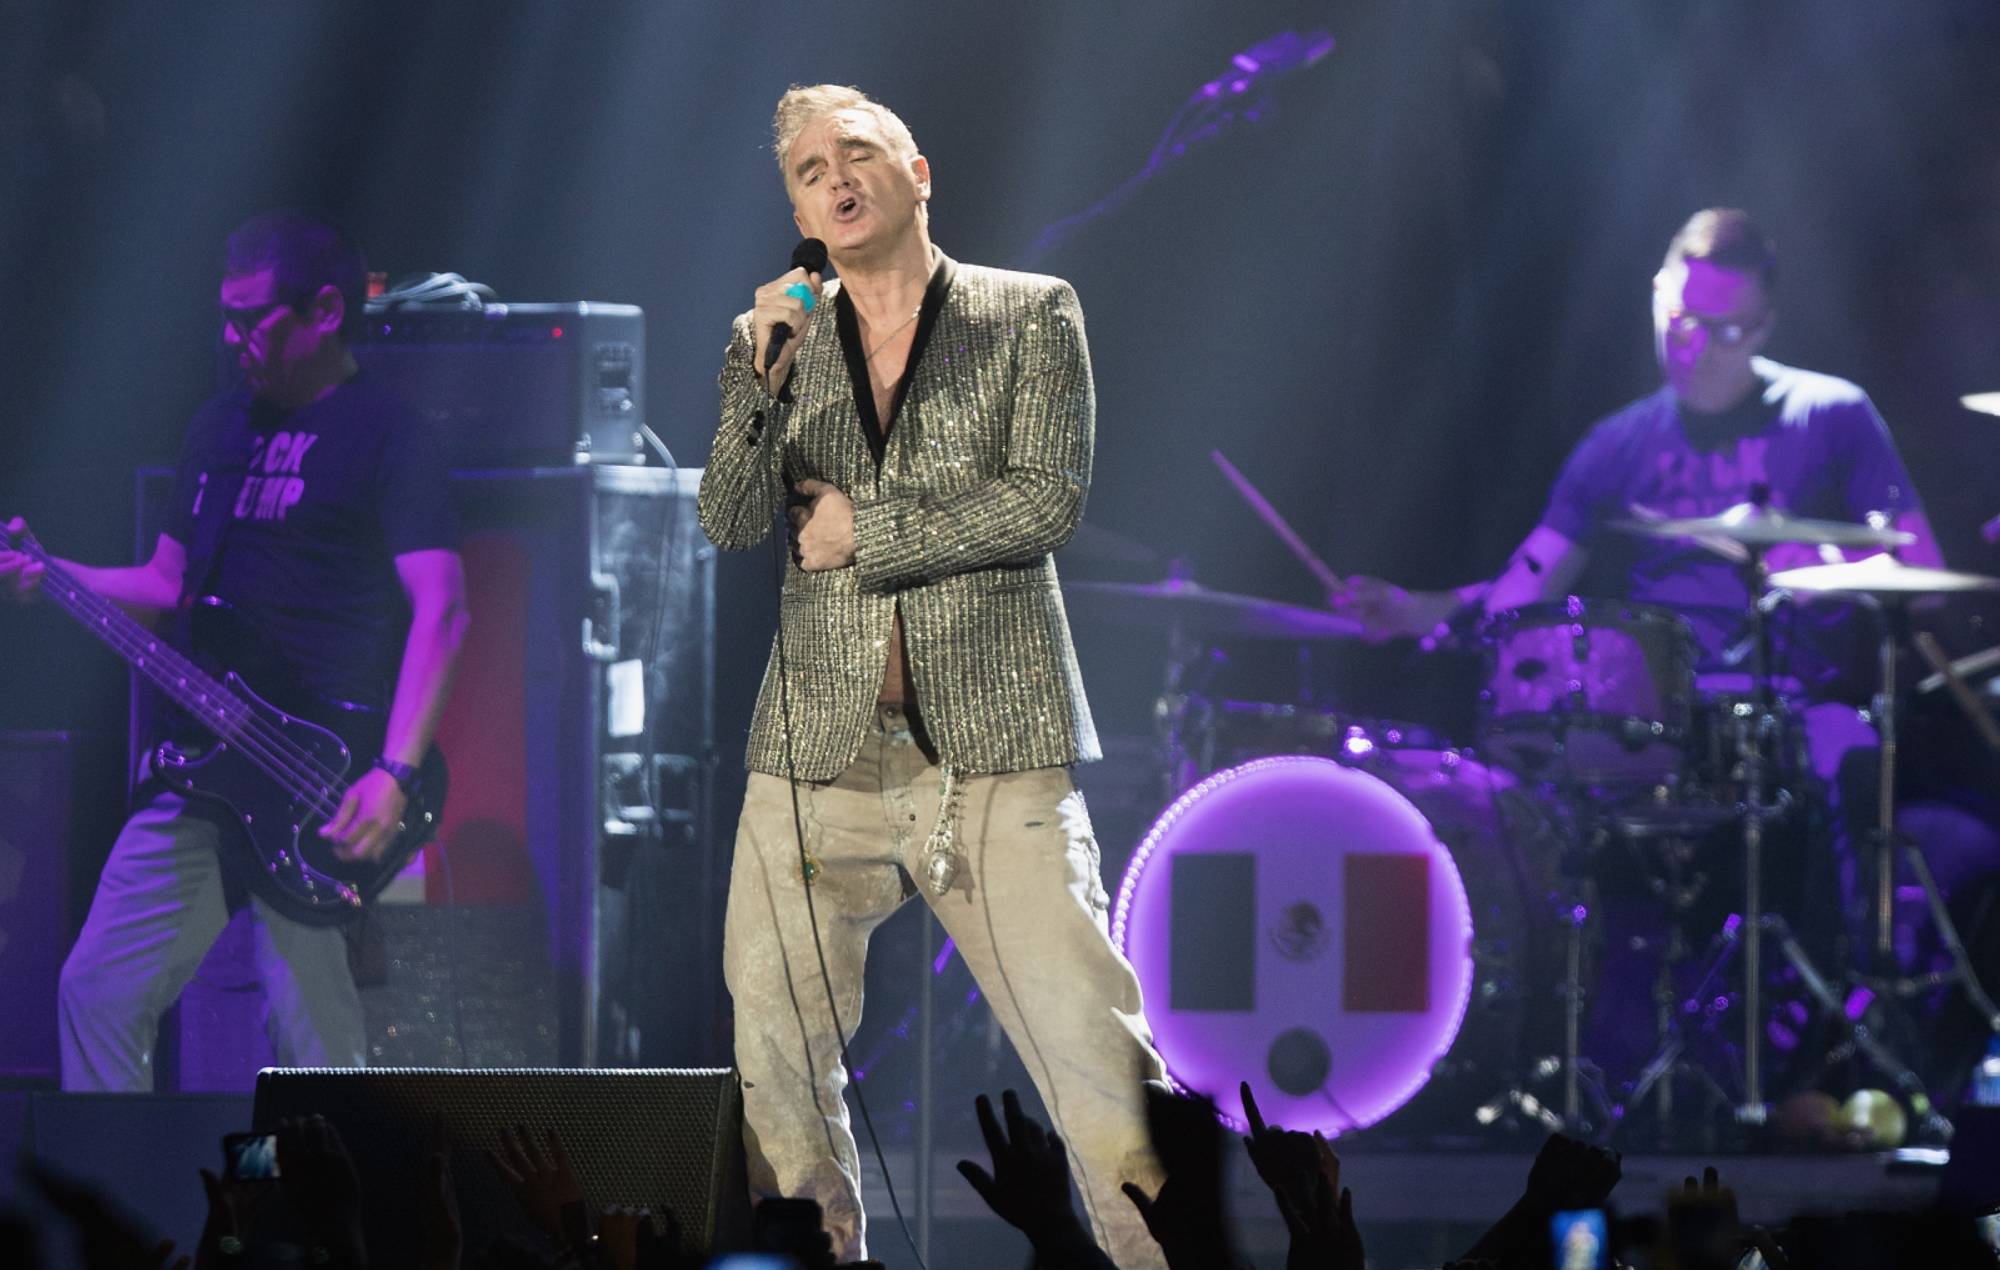 Singer Morrissey performs onstage at Palacio de Los Deportes on March 31, 2017 in Mexico City, Mexico. (Photo by Victor Chavez/WireImage)